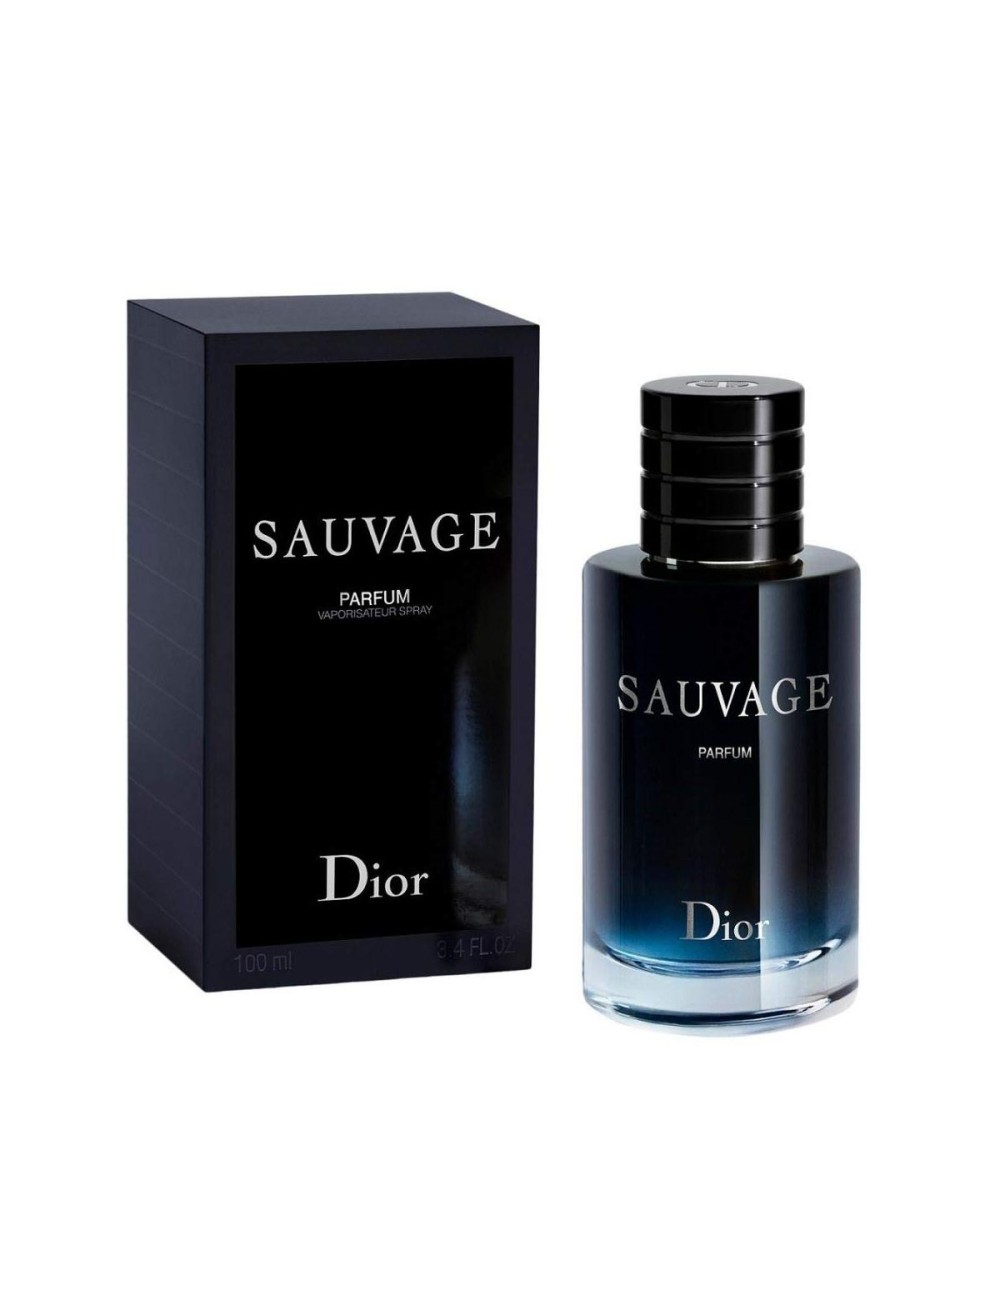 Sauvage Dior Parfum 100ml